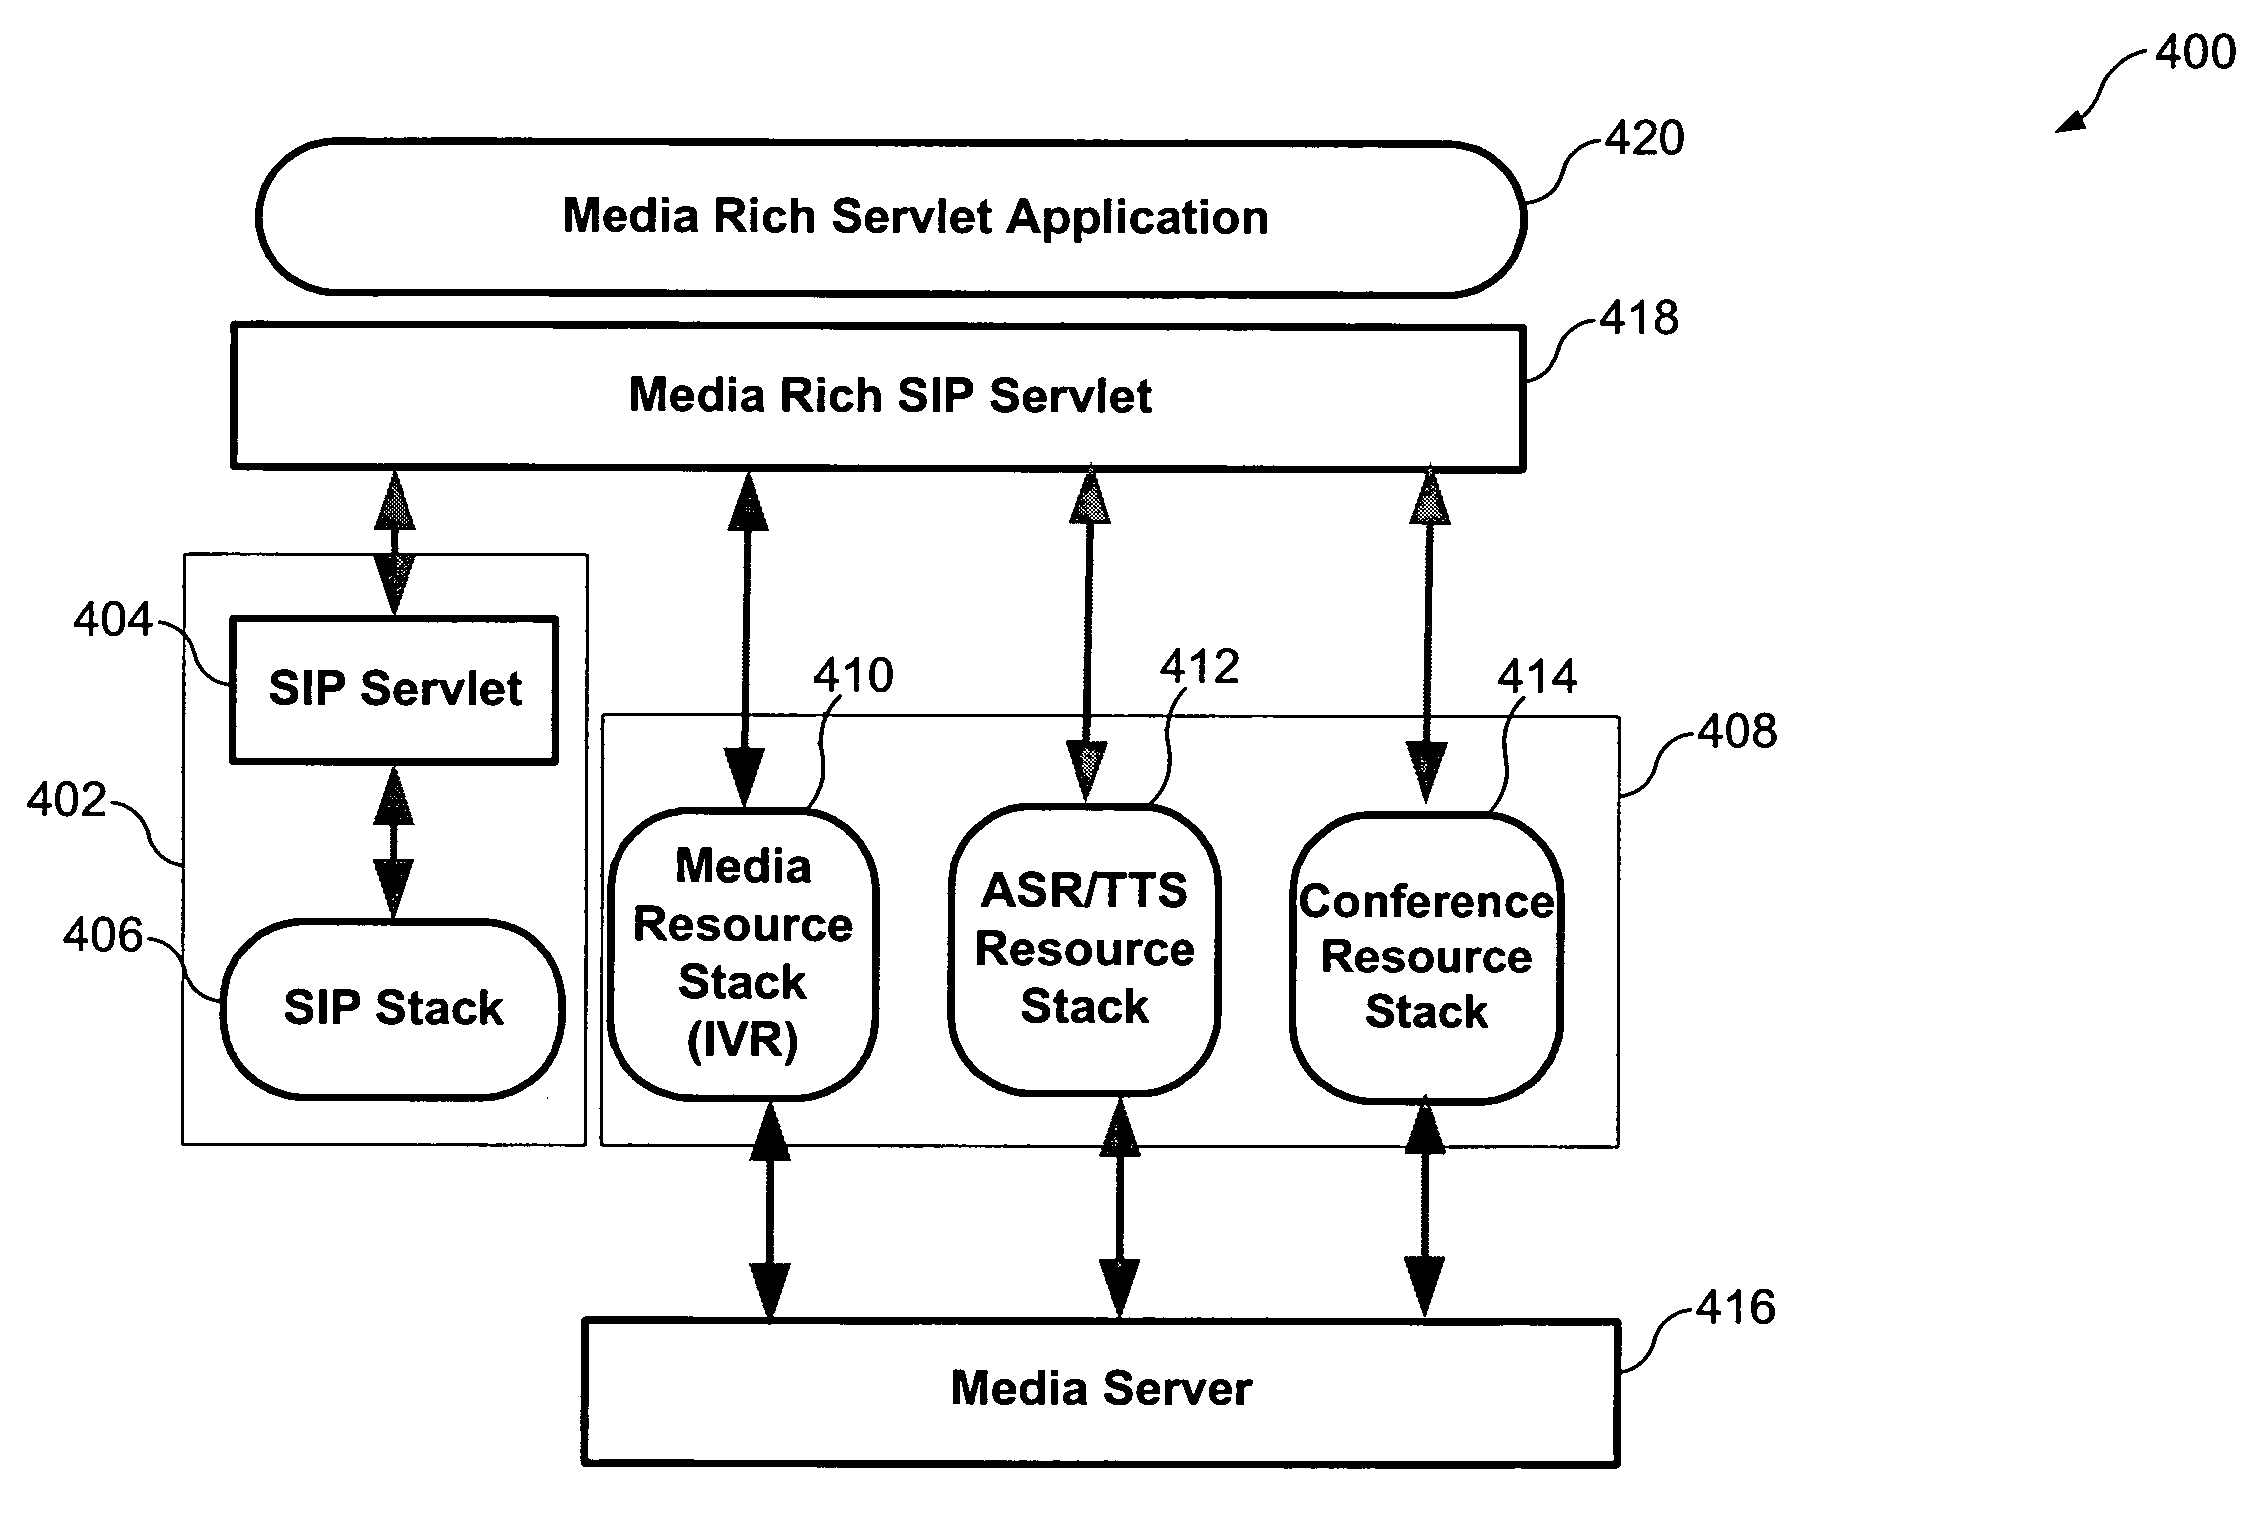 Servlet model for media rich applications